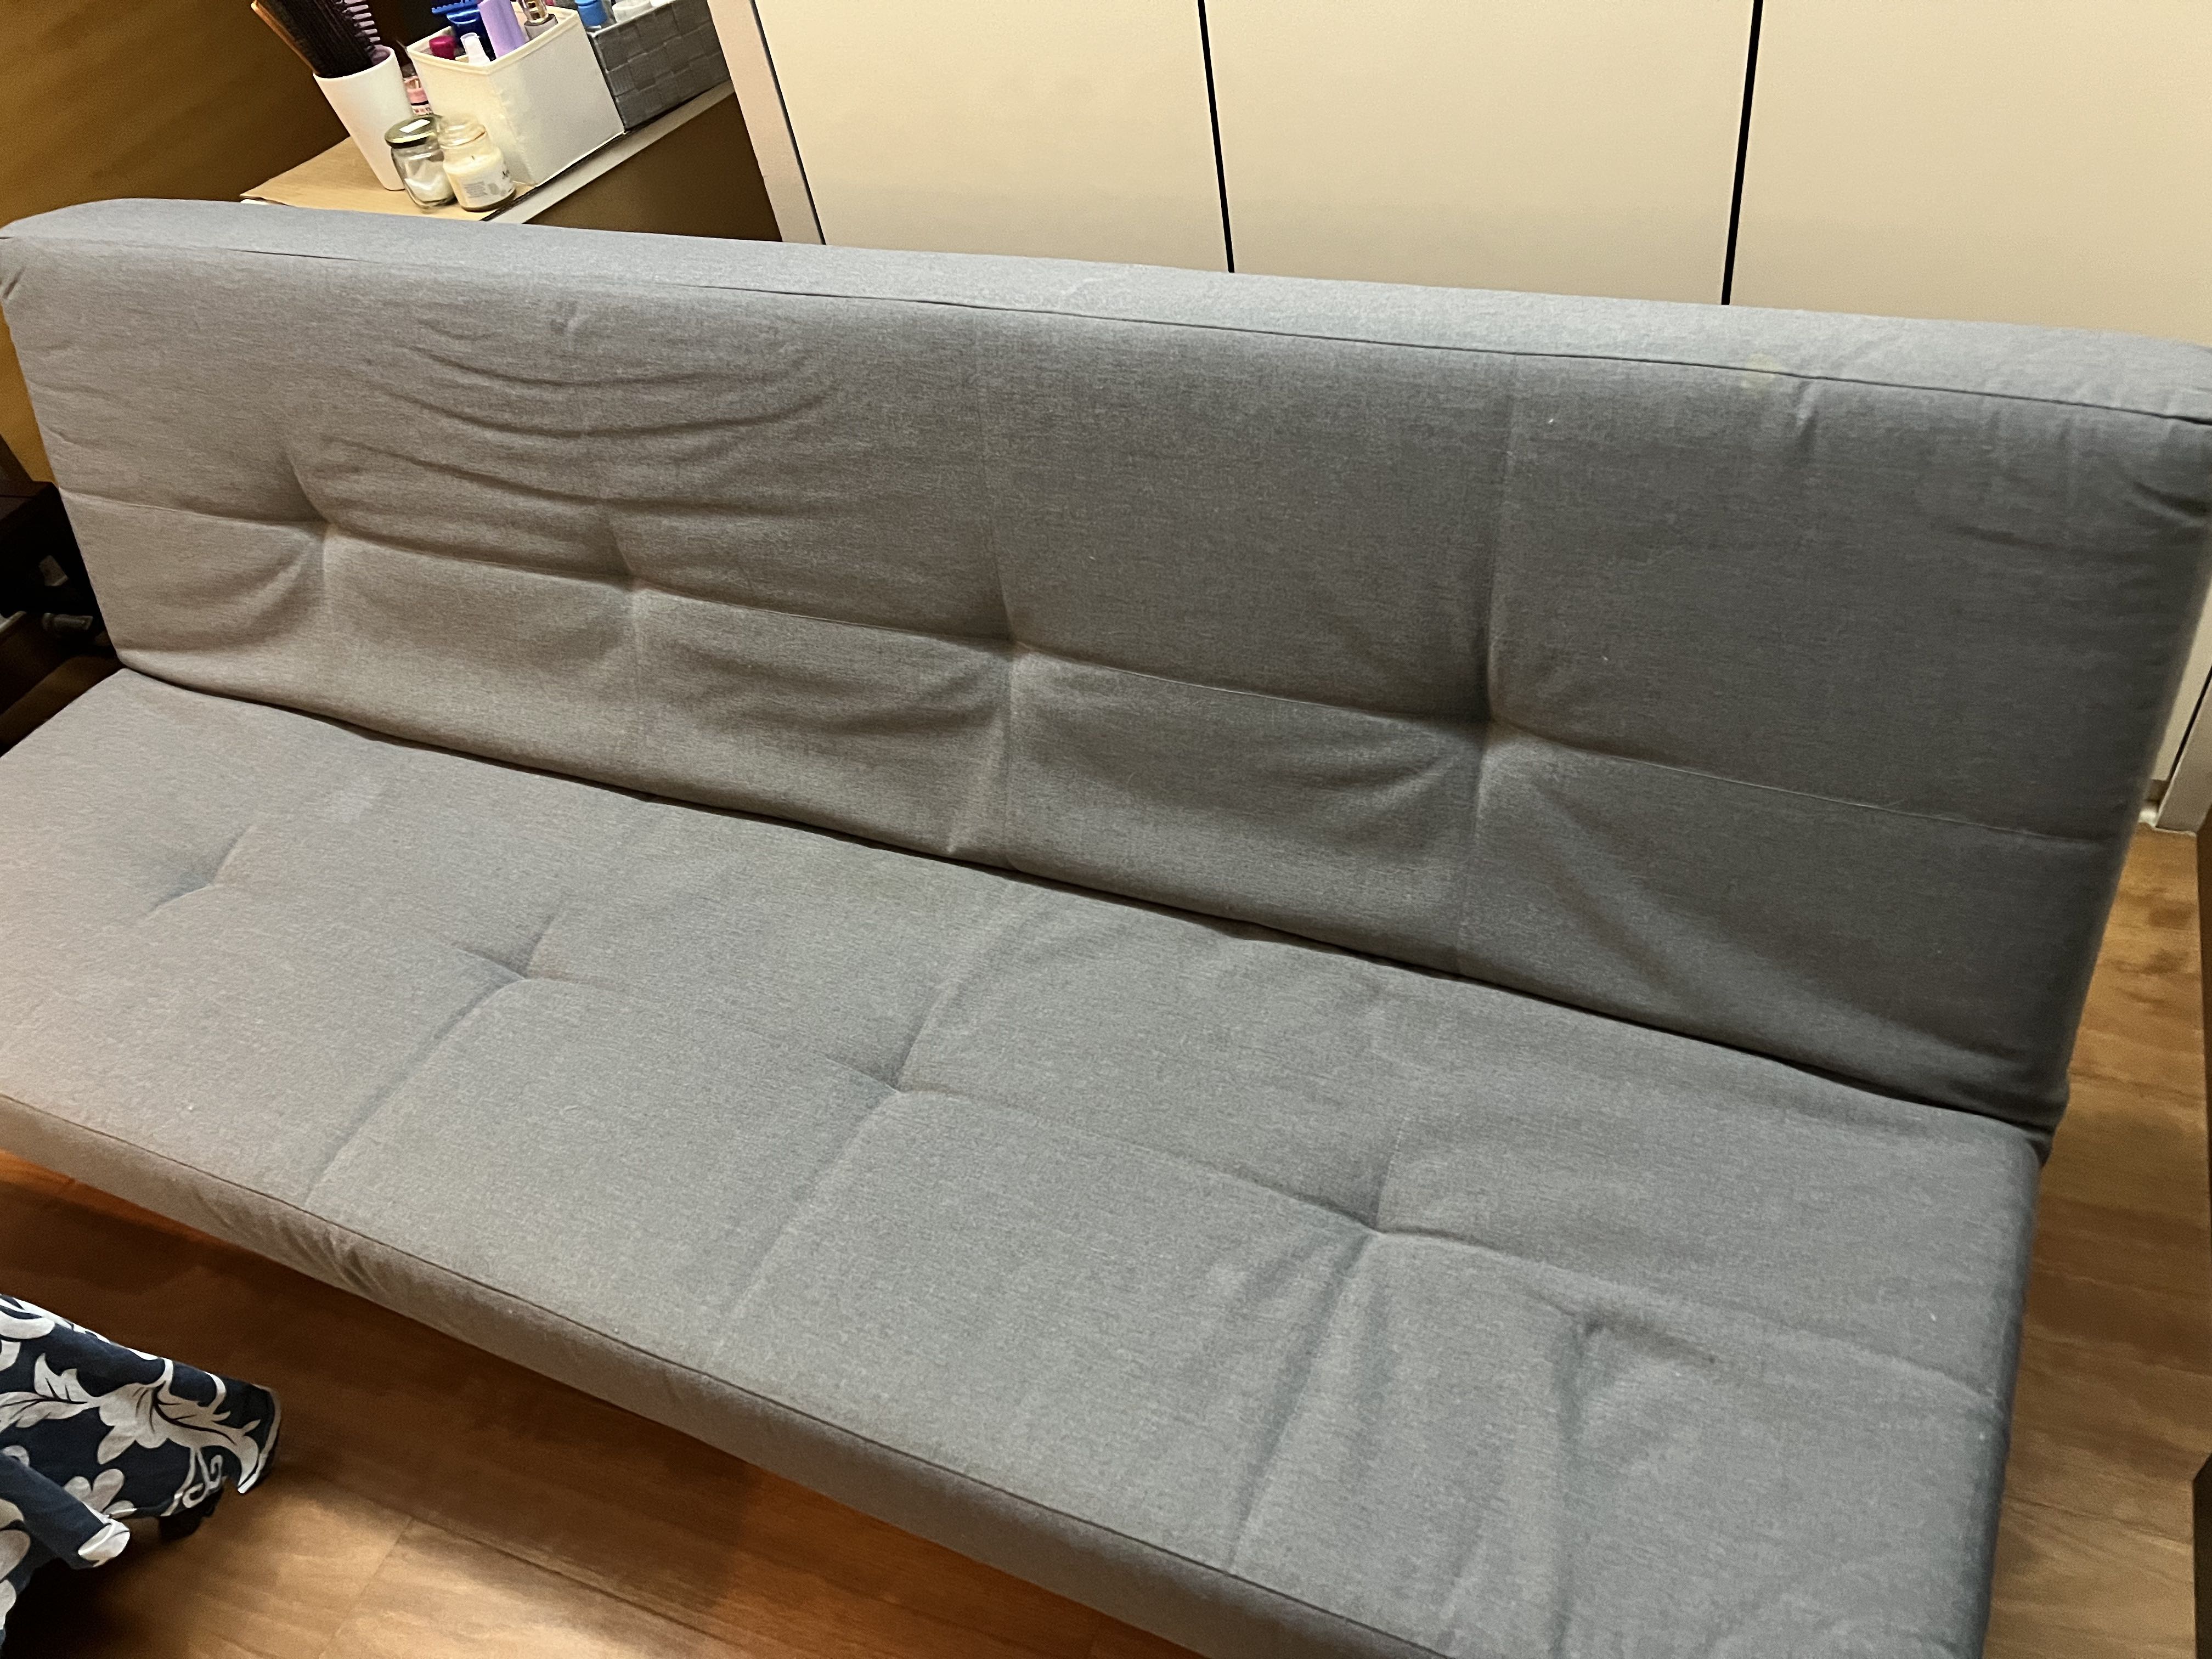 balkarp sofa bed instructions